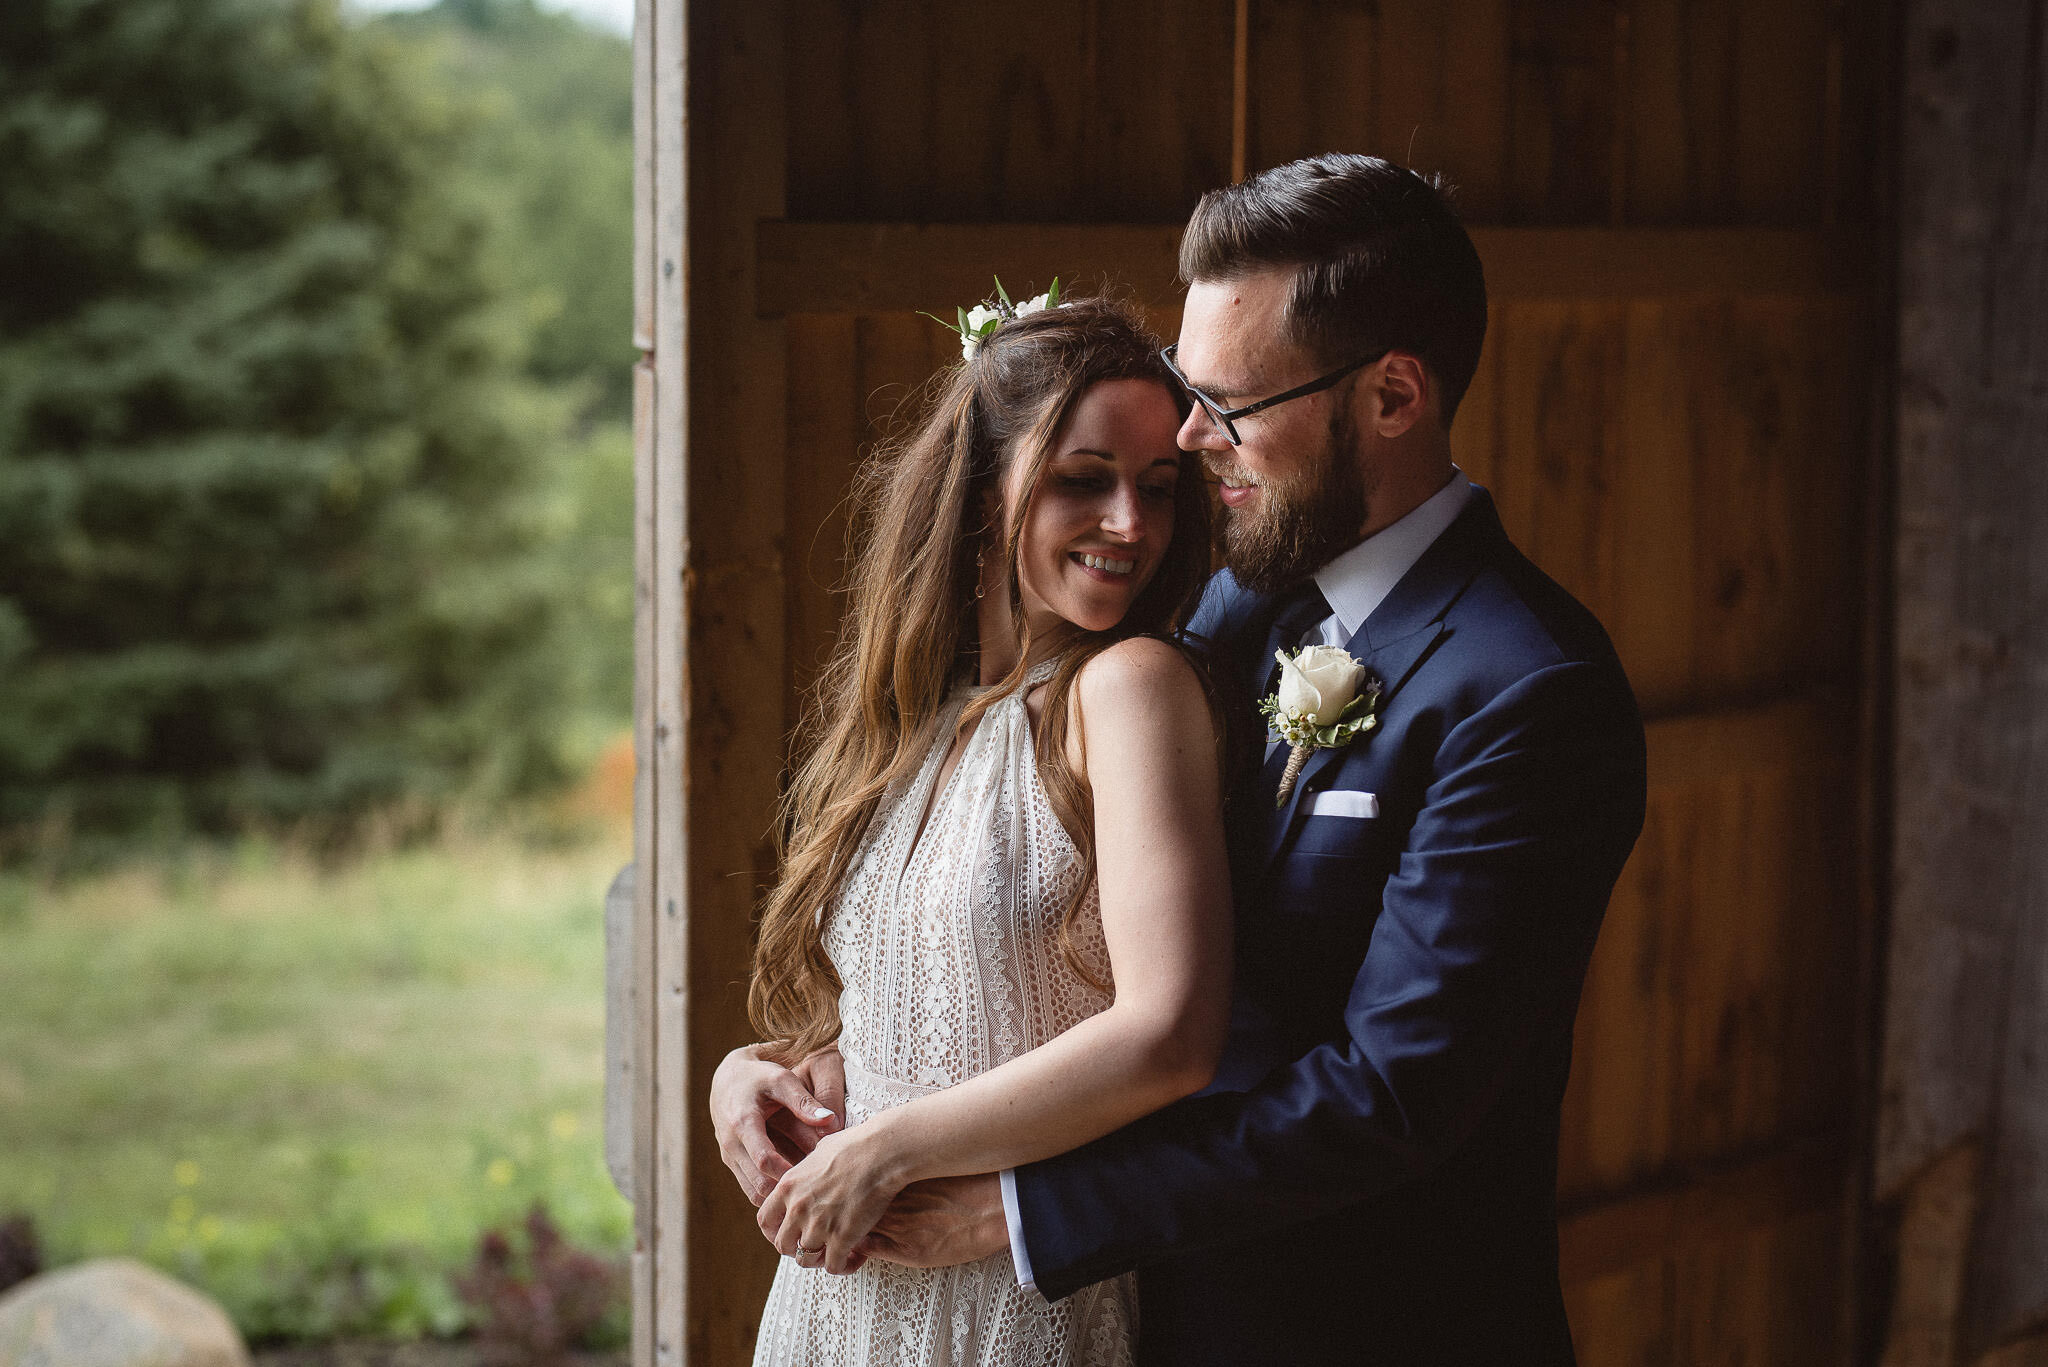 Wedding photo at barn | Ontario Wedding Photographer